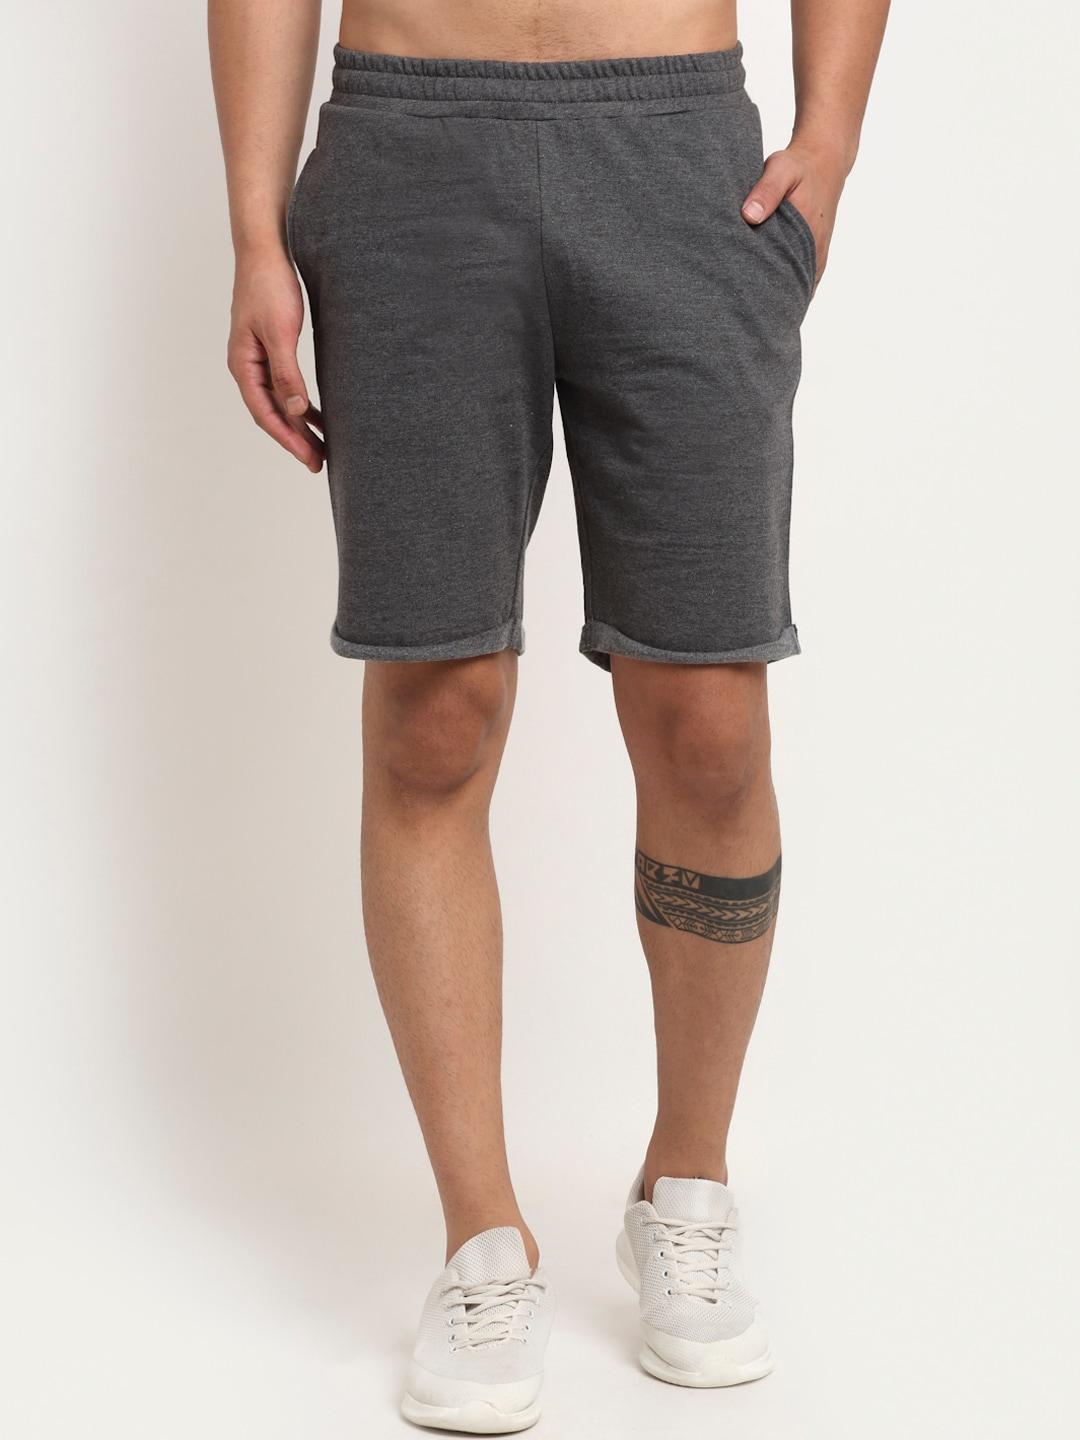 door74-men-charcoal-grey-loose-fit-cotton-shorts